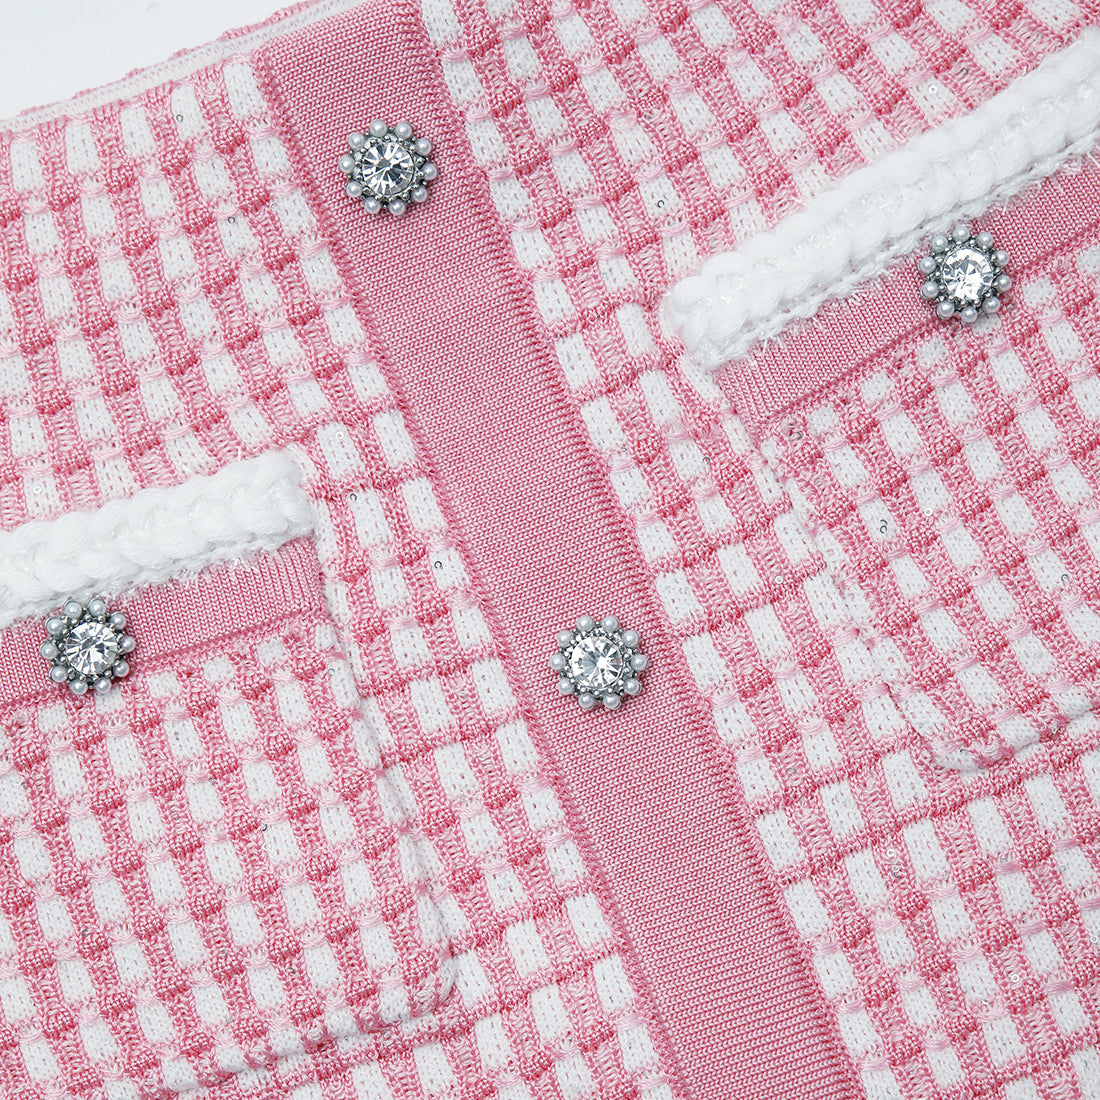 Baby Pink Knit Dress